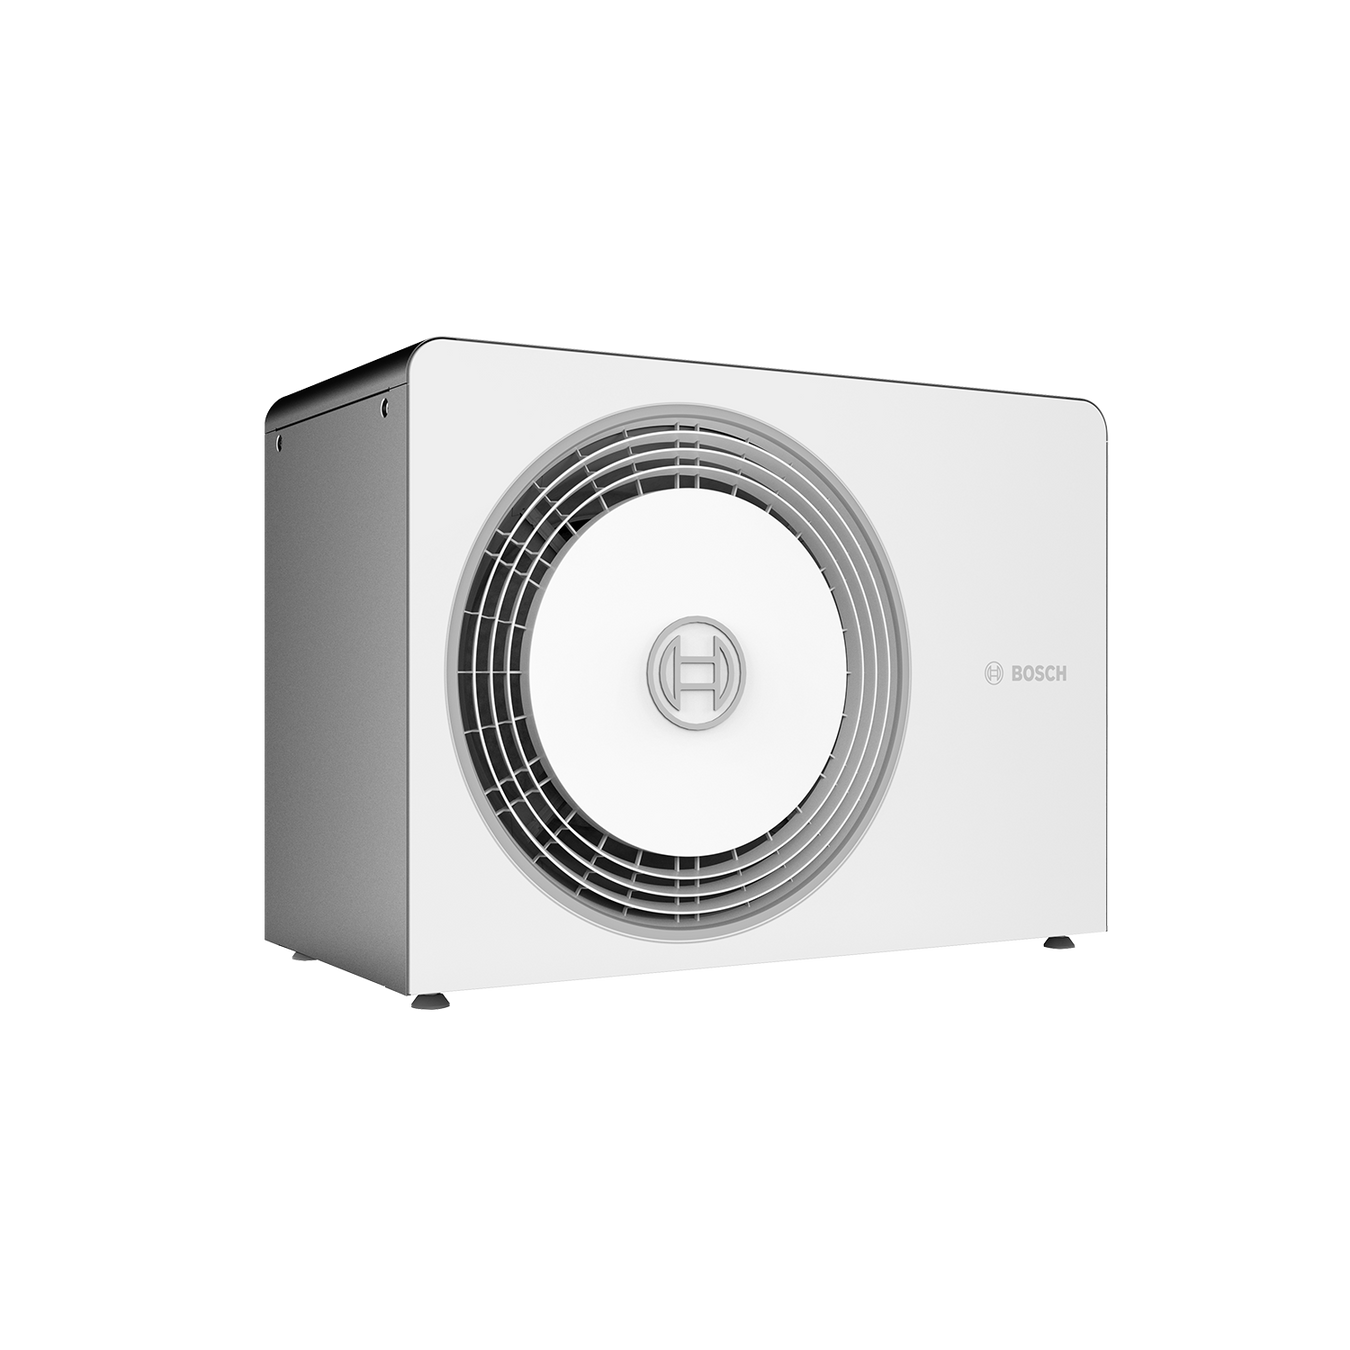 Nefit-Bosch warmtepompen | V2